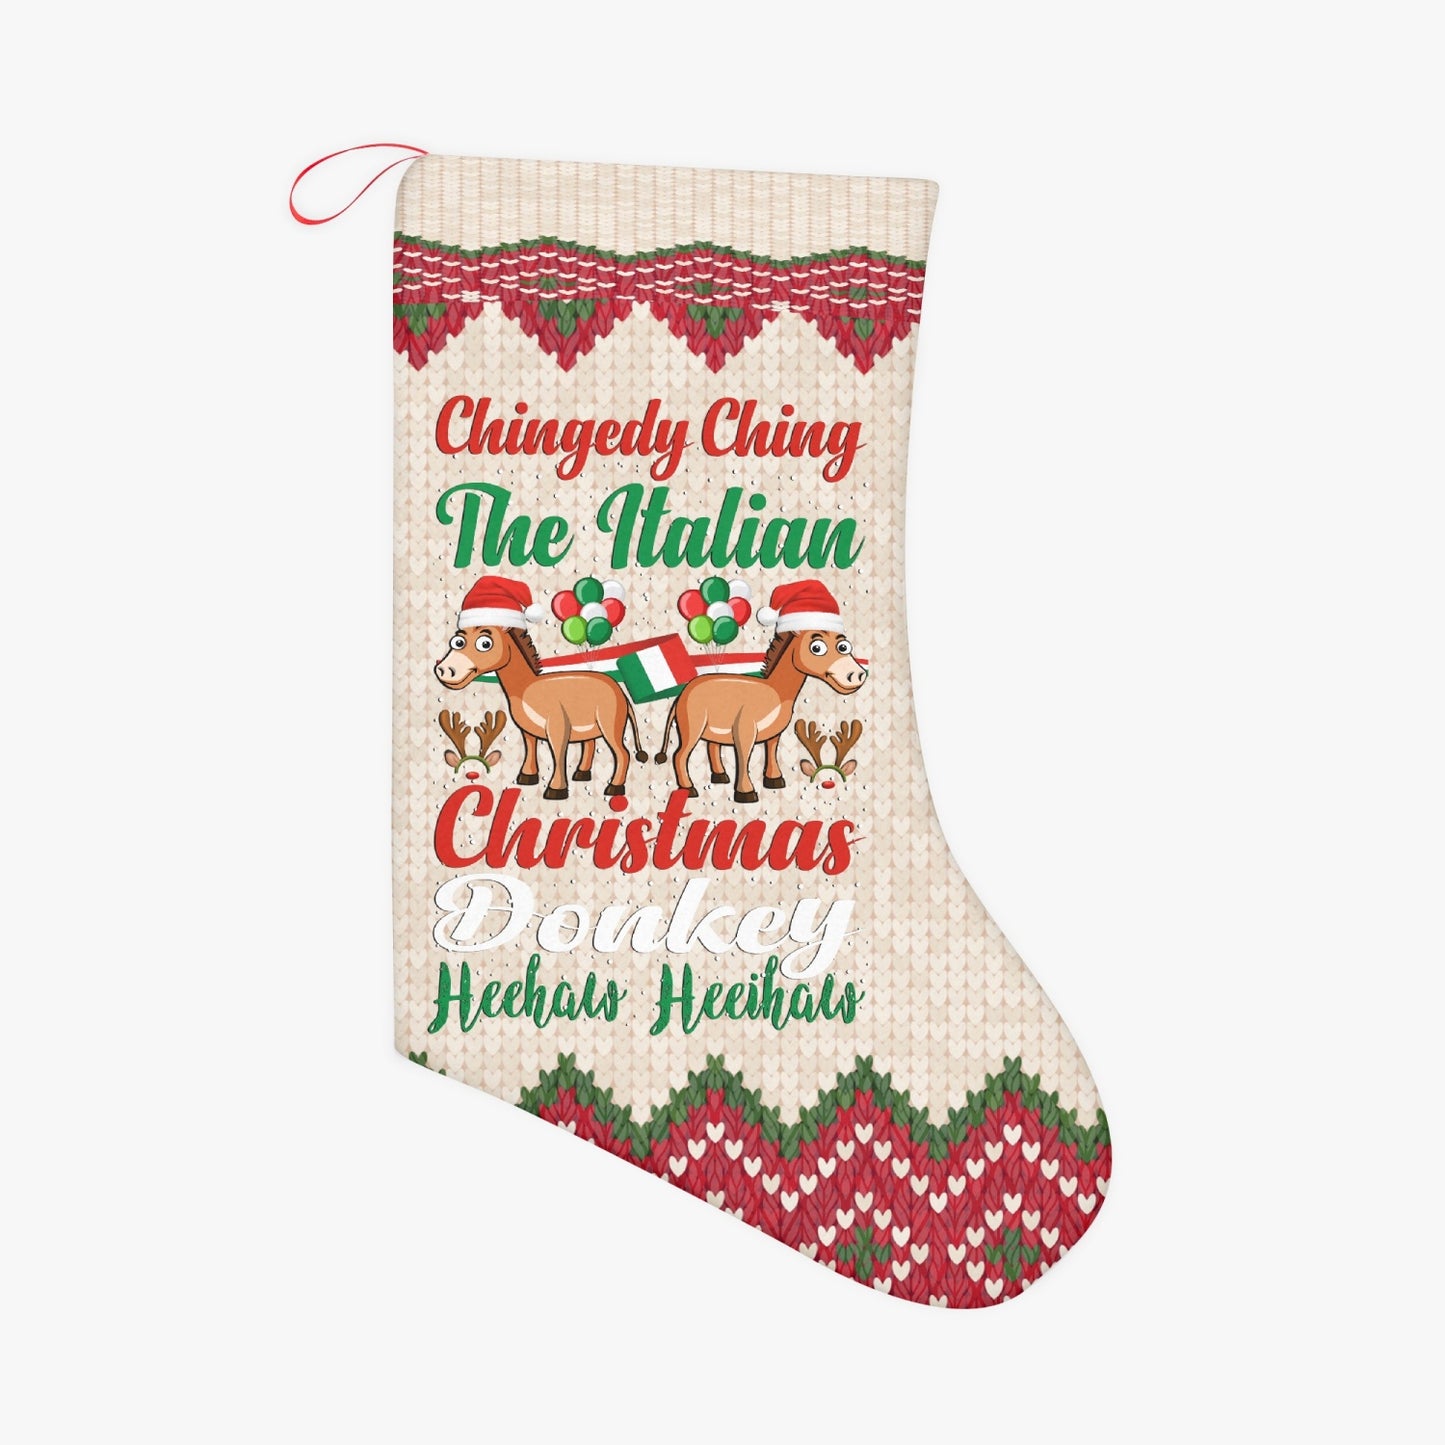 Christmas Santa Stockings - The Italian Christmas